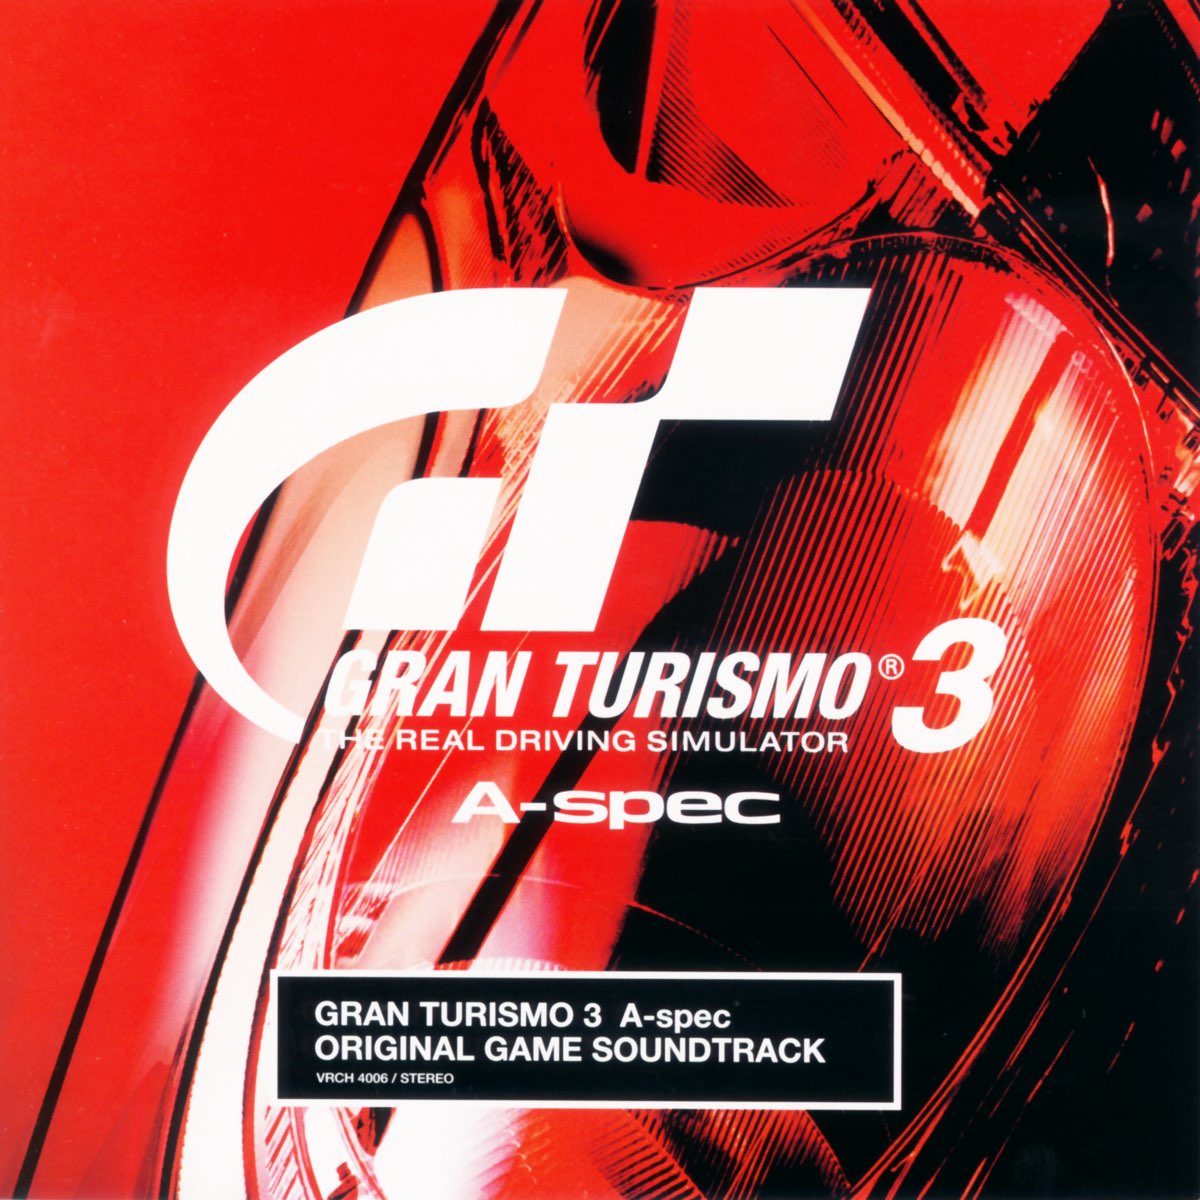 ‎GRAN TURISMO 3 Aspec ORIGINAL GAME SOUNDTRACK Album by Sony